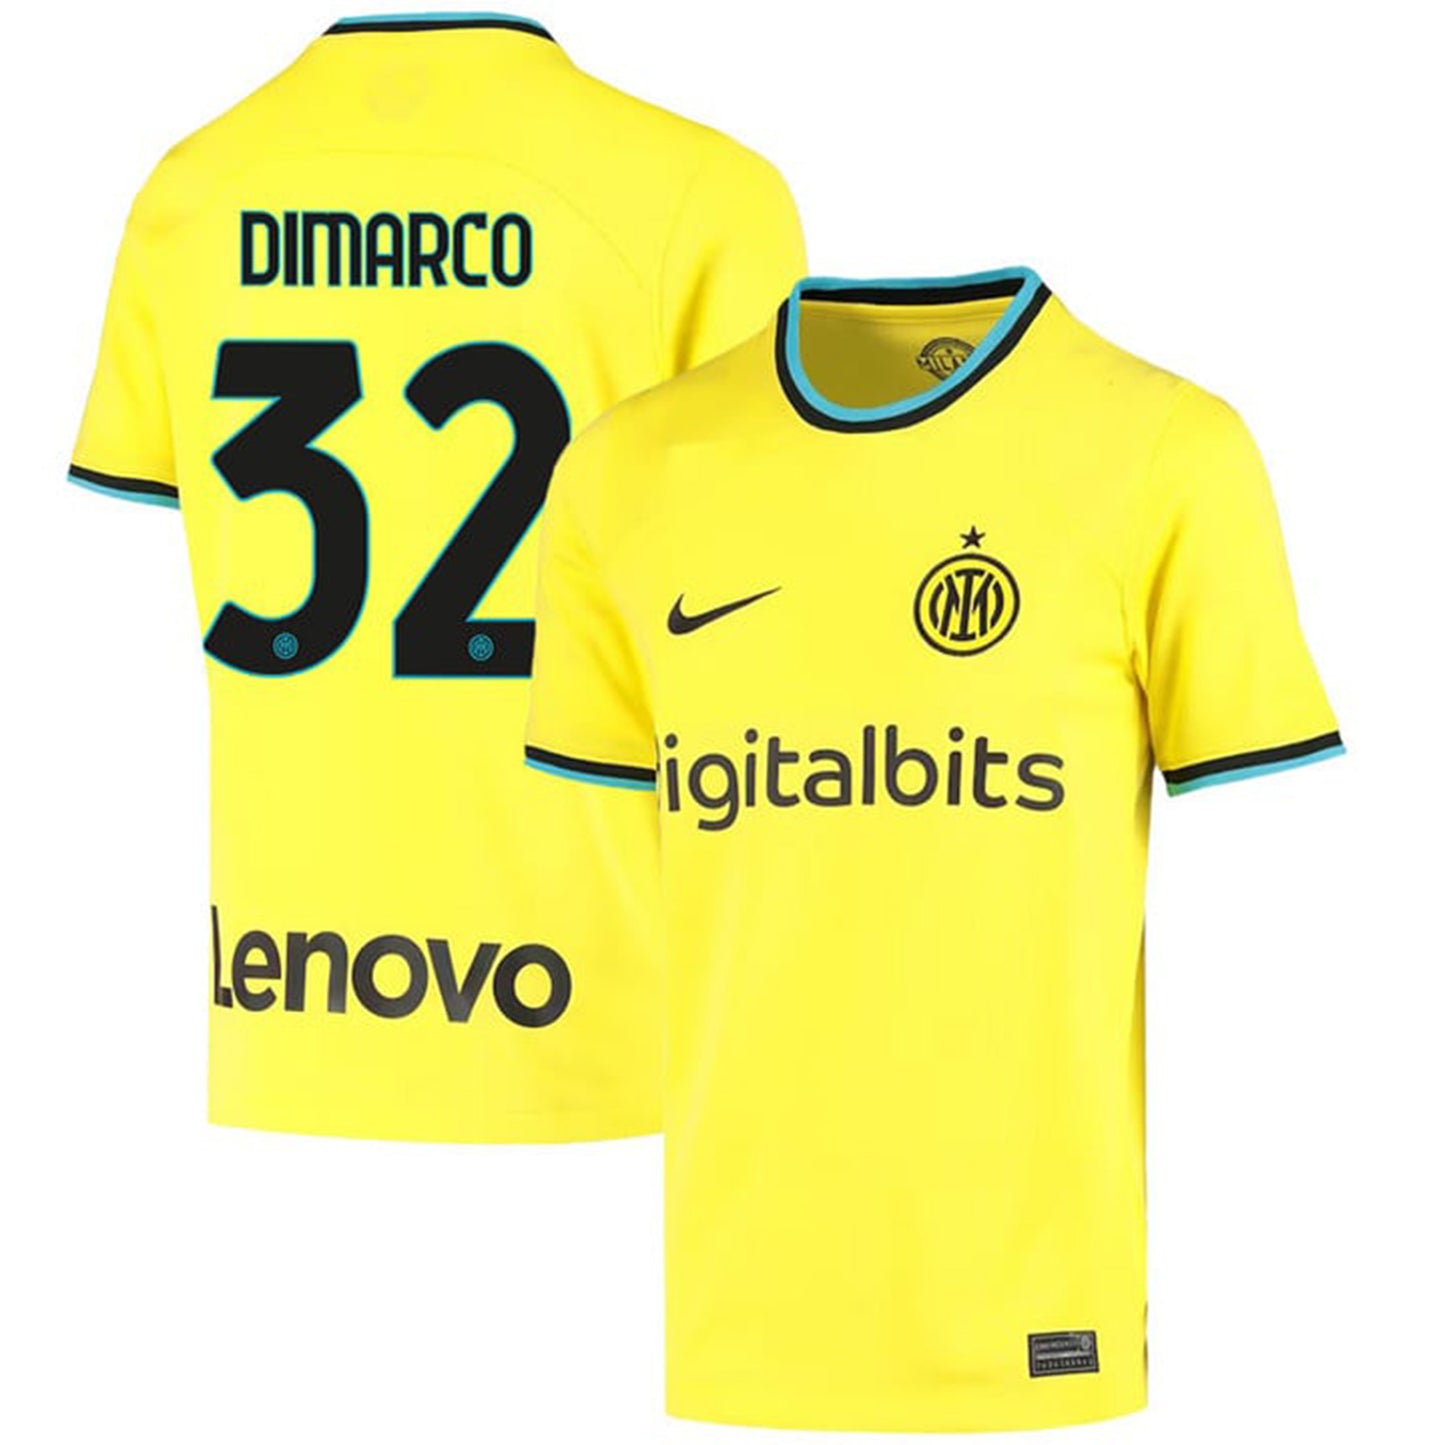 Federico Dimarco Inter Milan 32 Jersey